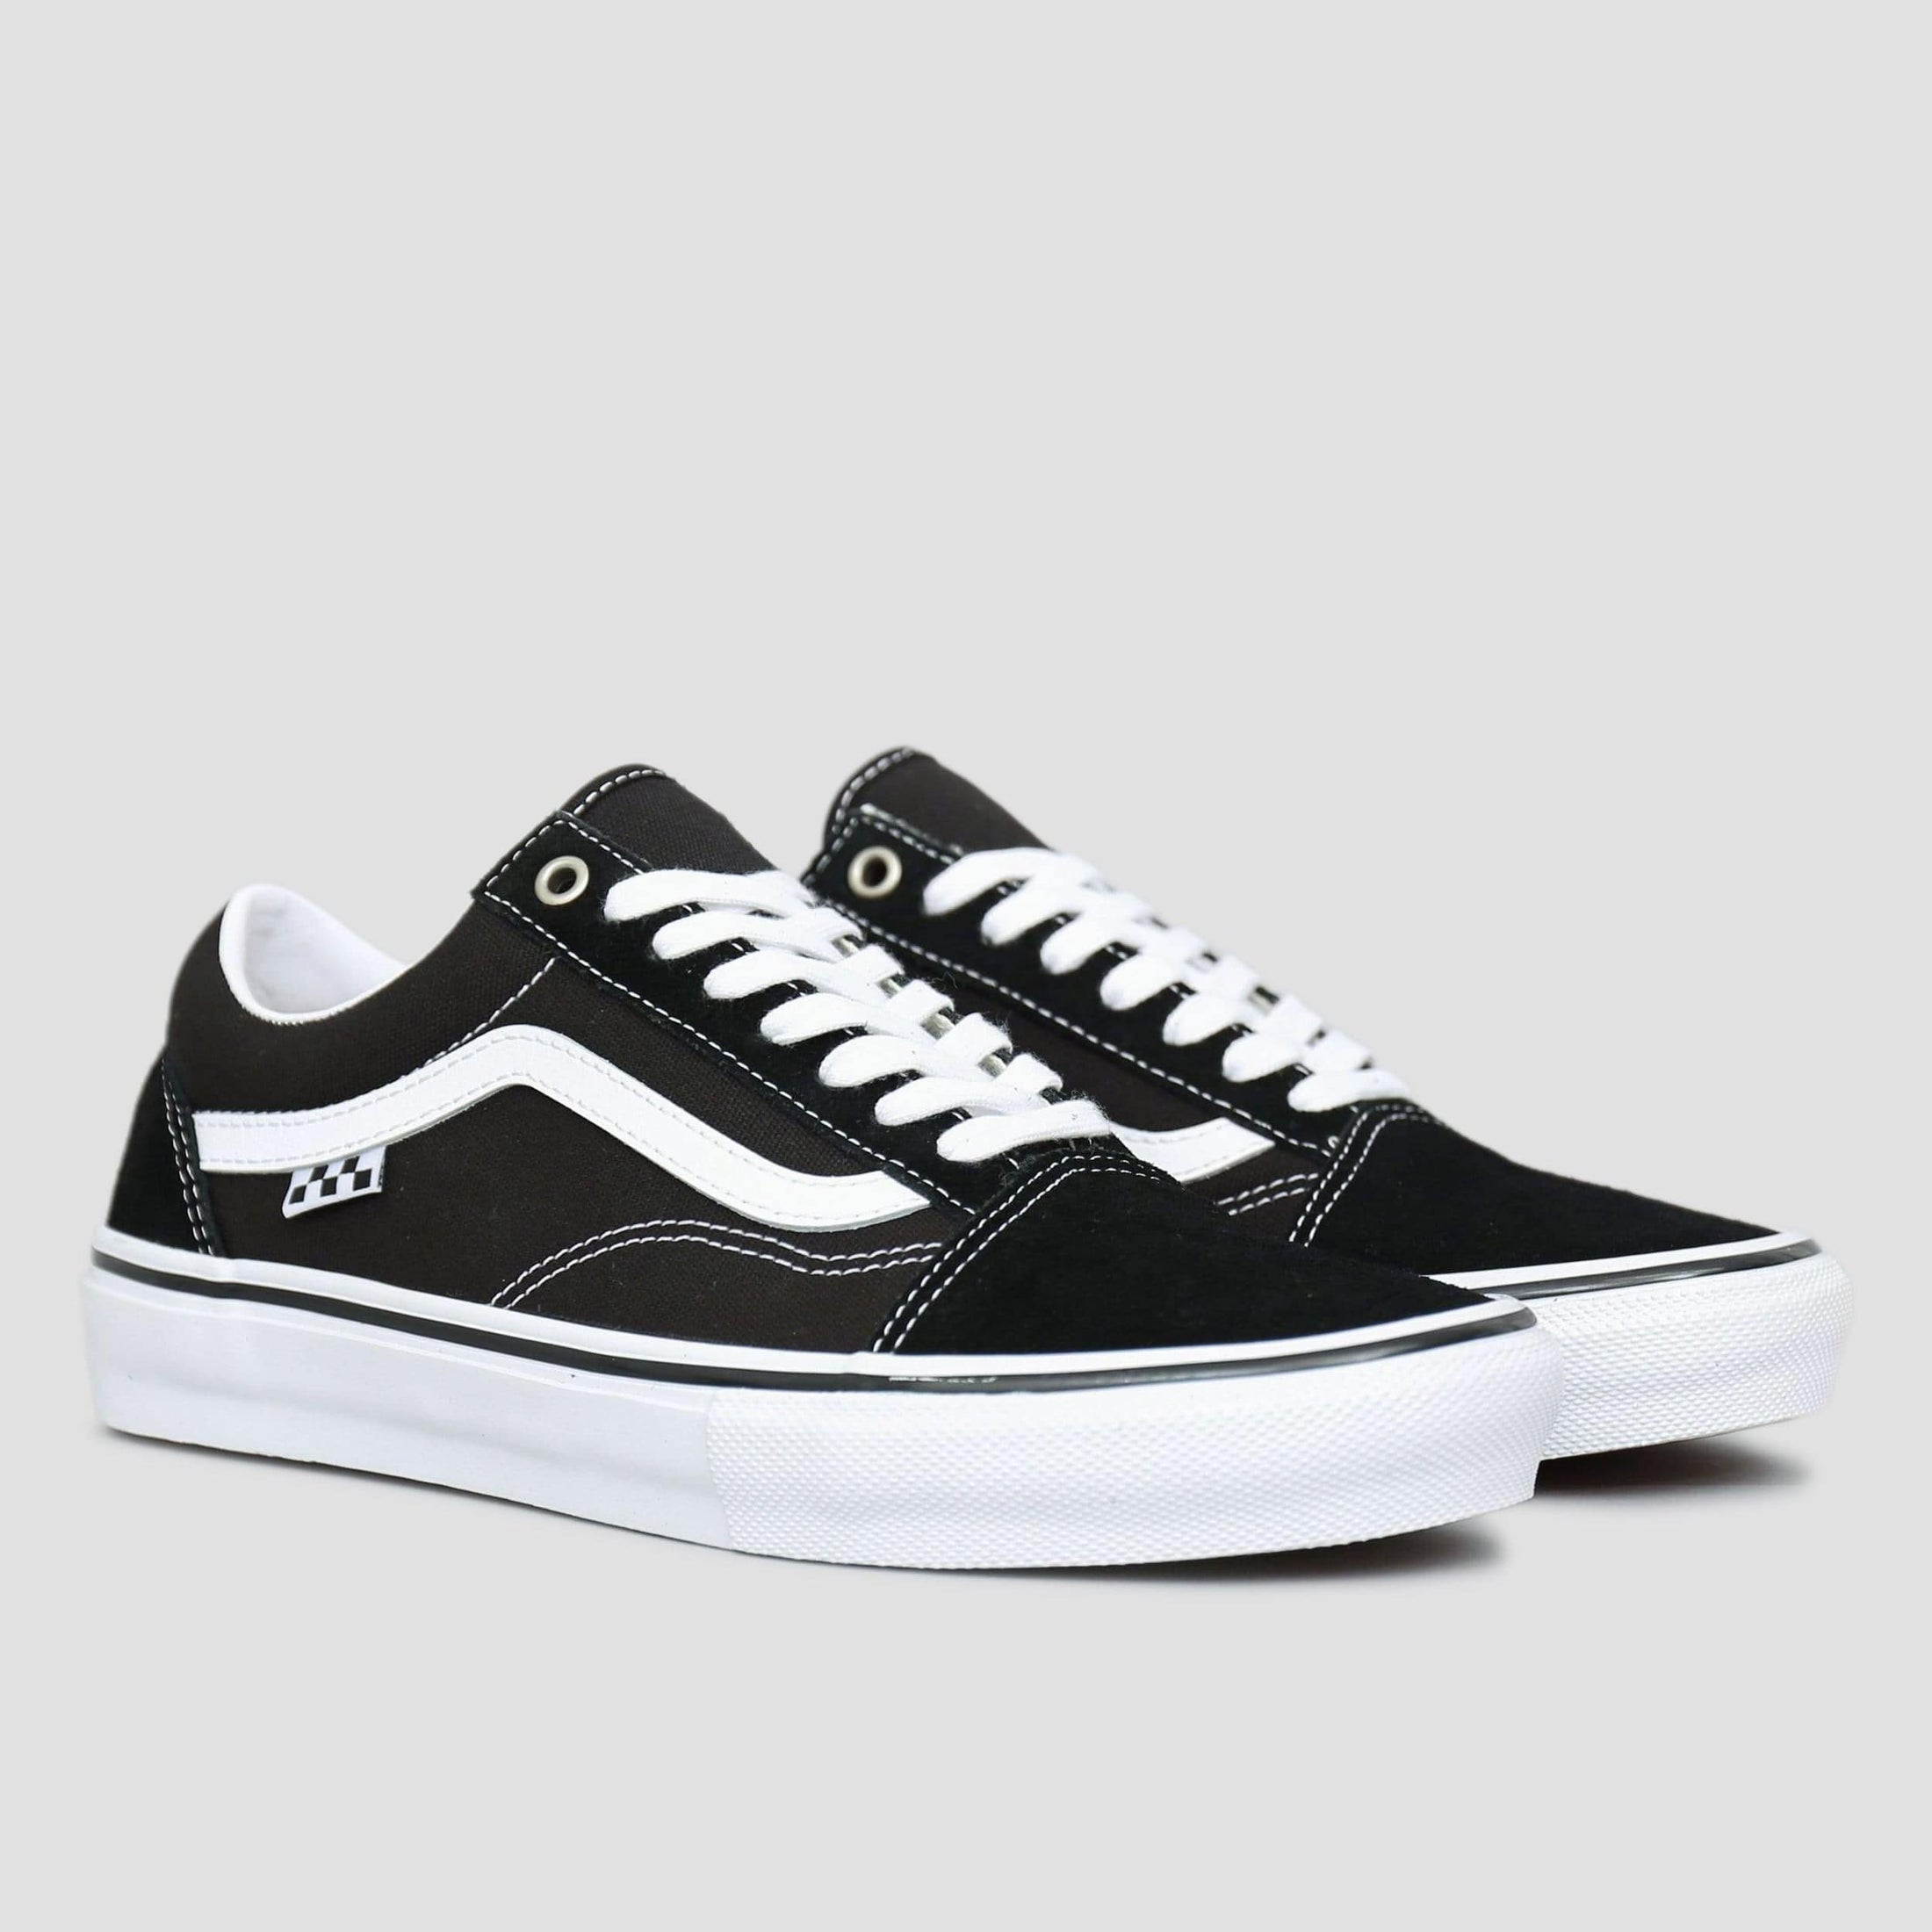 Vans Skate Old Skool Shoes Black / White